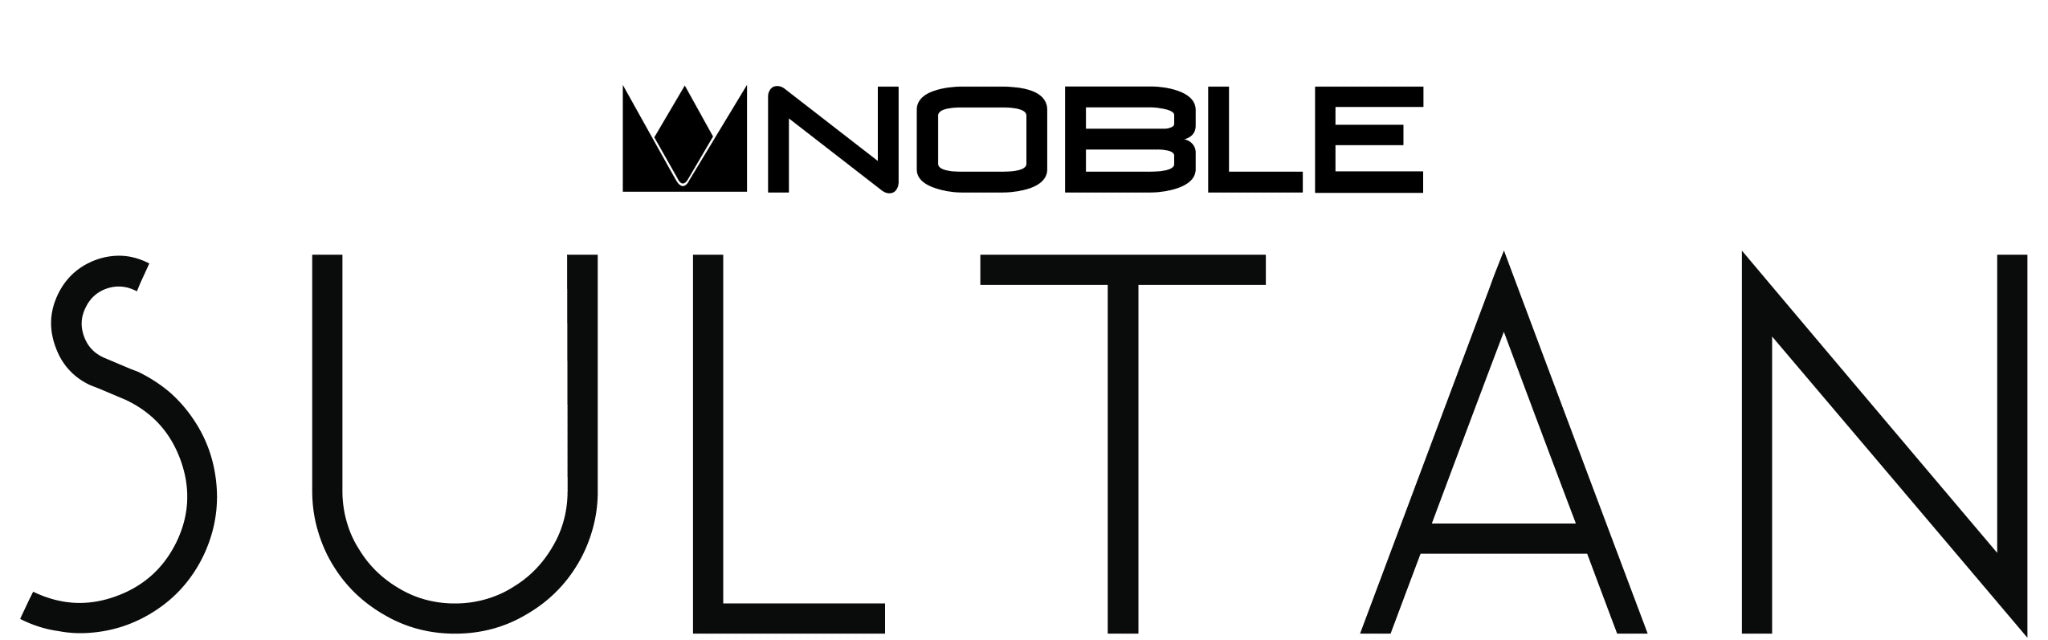 Noble Audio Sultan logo black